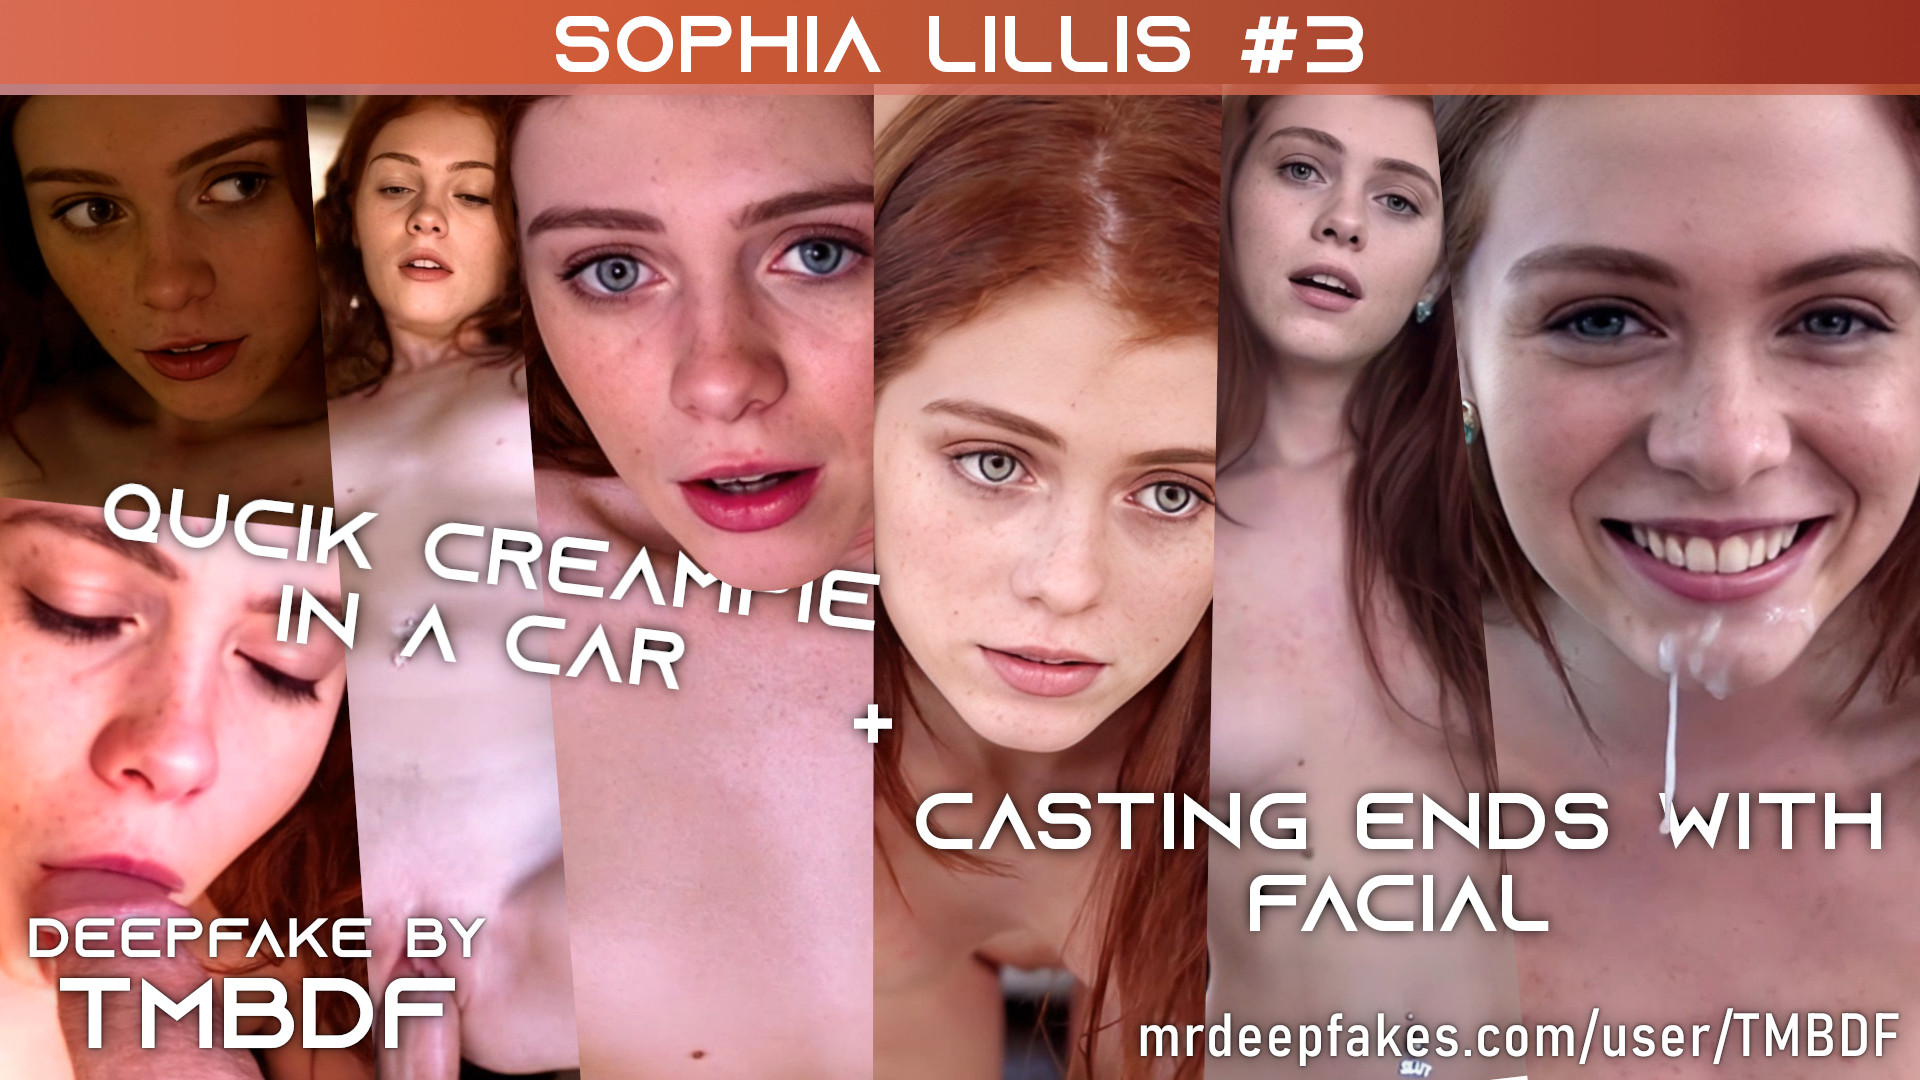 Sophia Lillis #3 - PREVIEW - Full version in video description